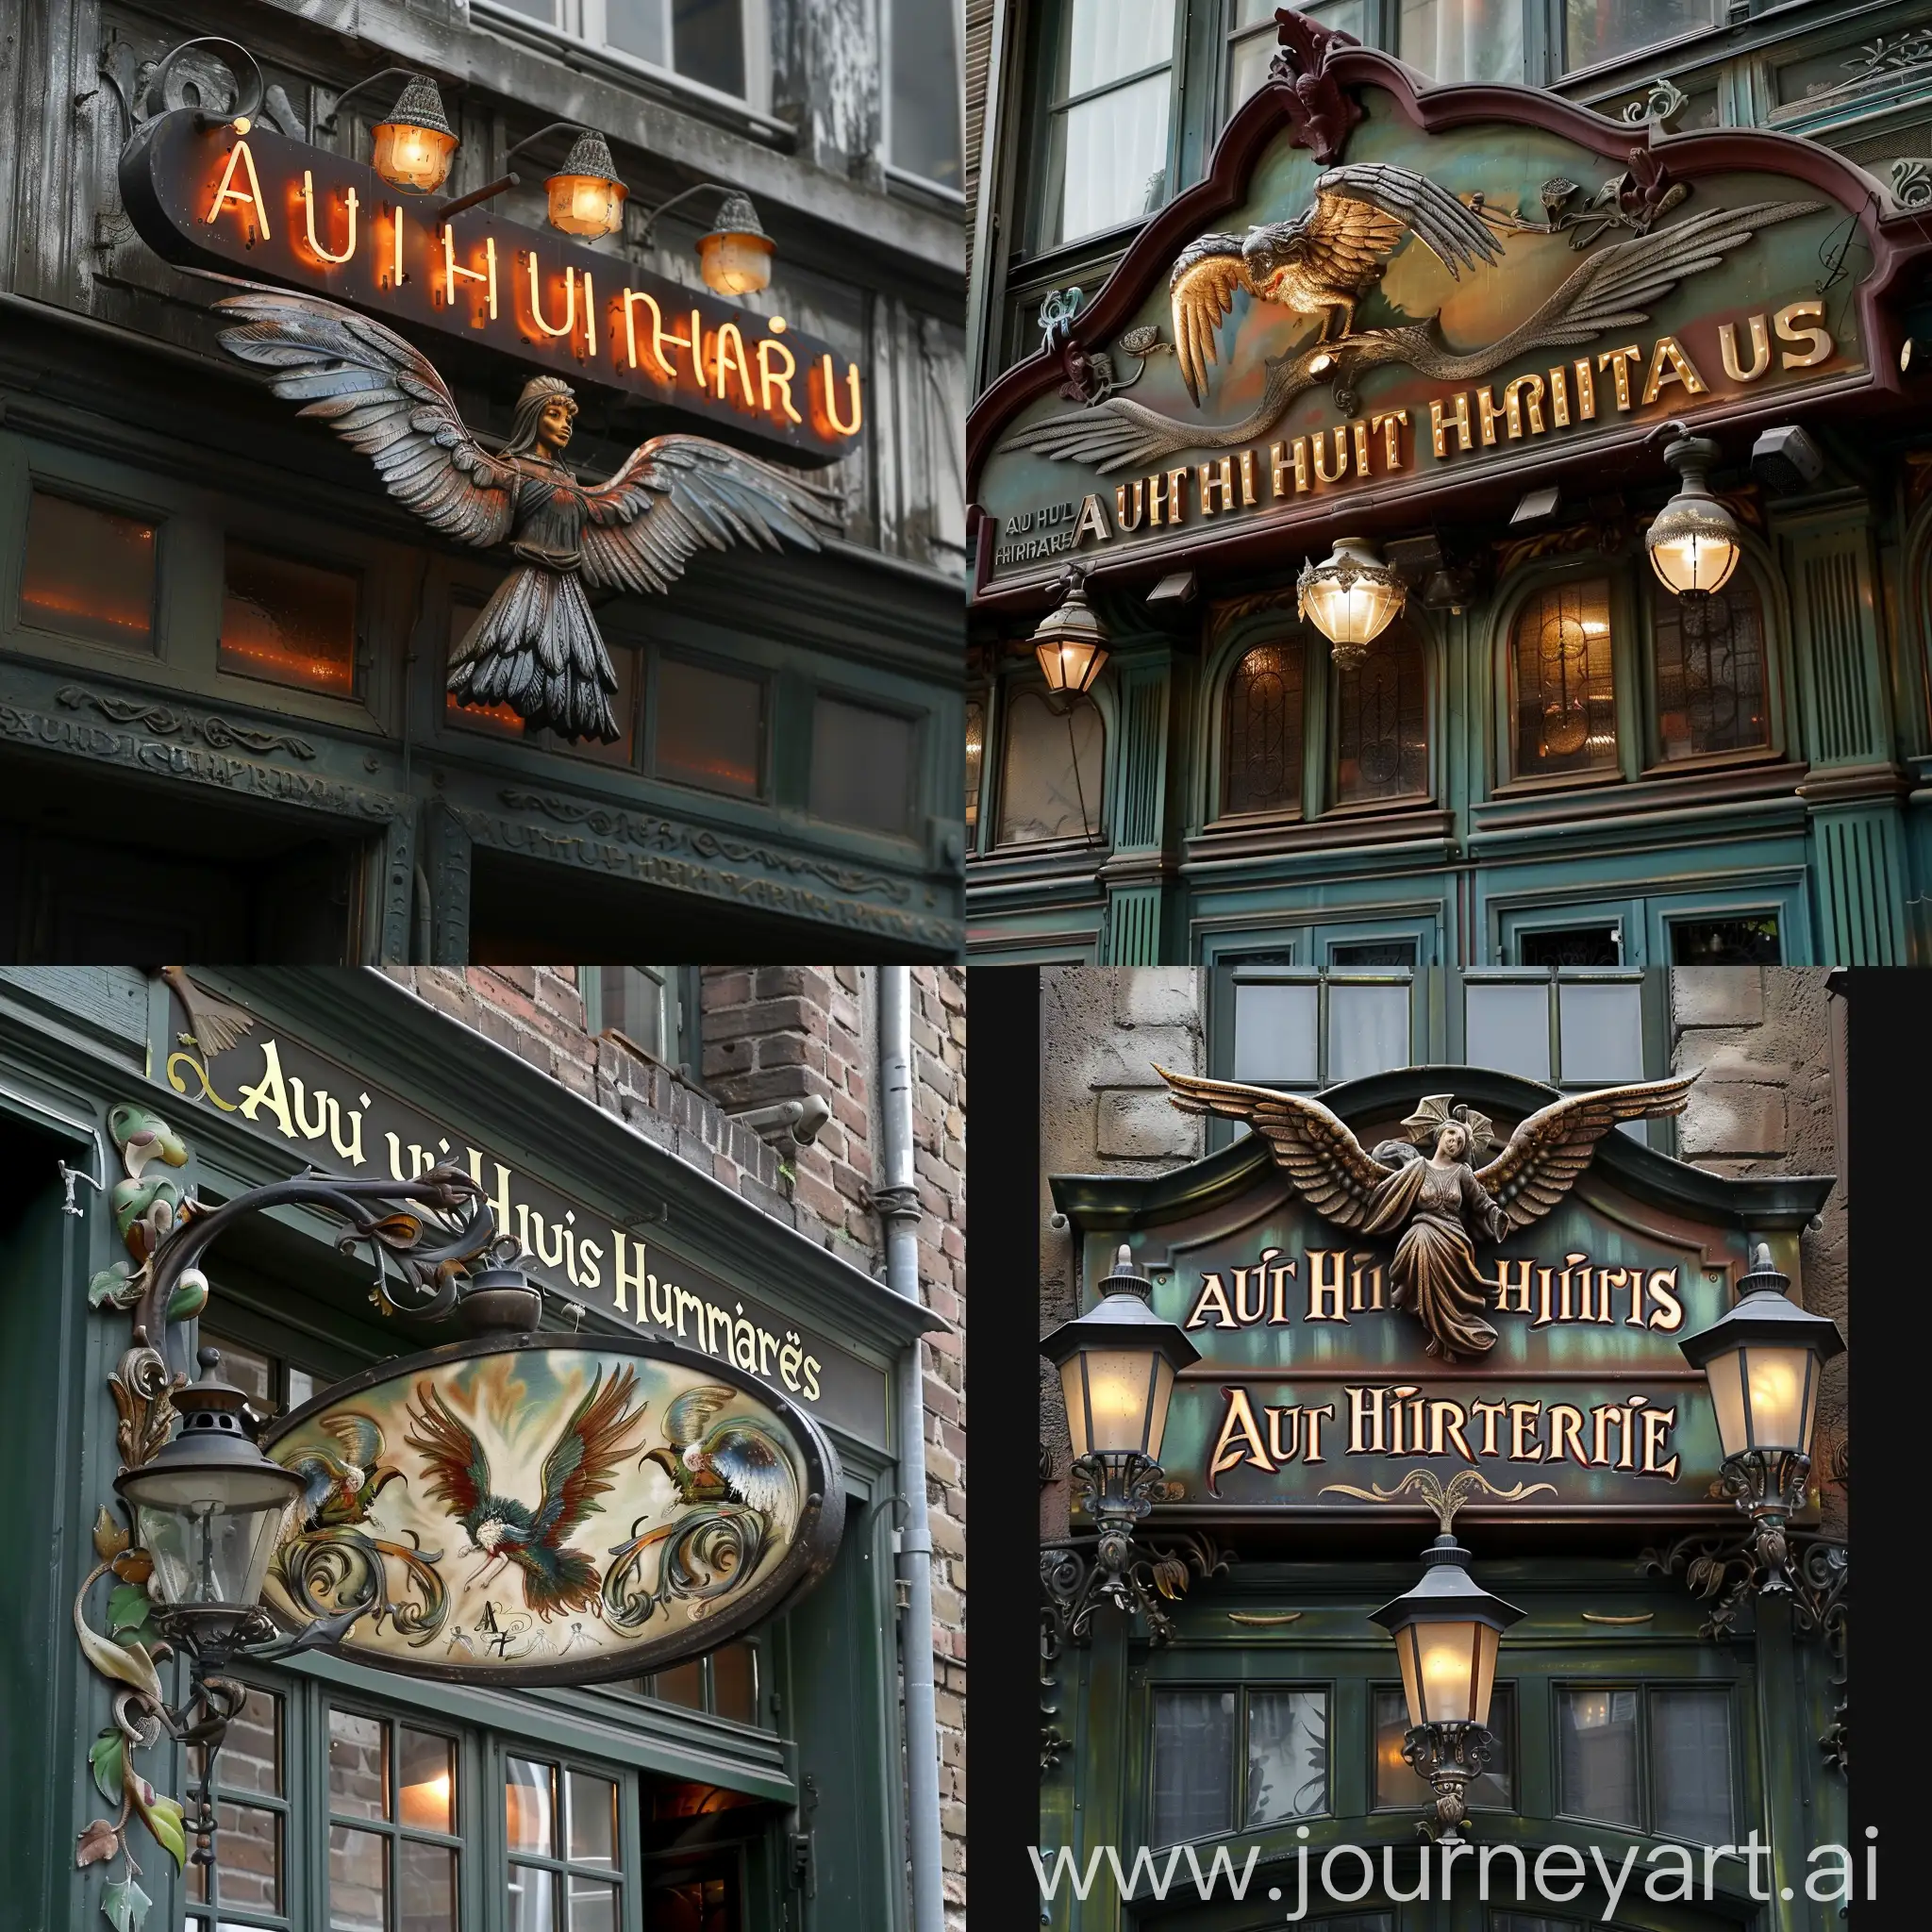 A restaurant sign called: Aux Huits Harpies Volantes